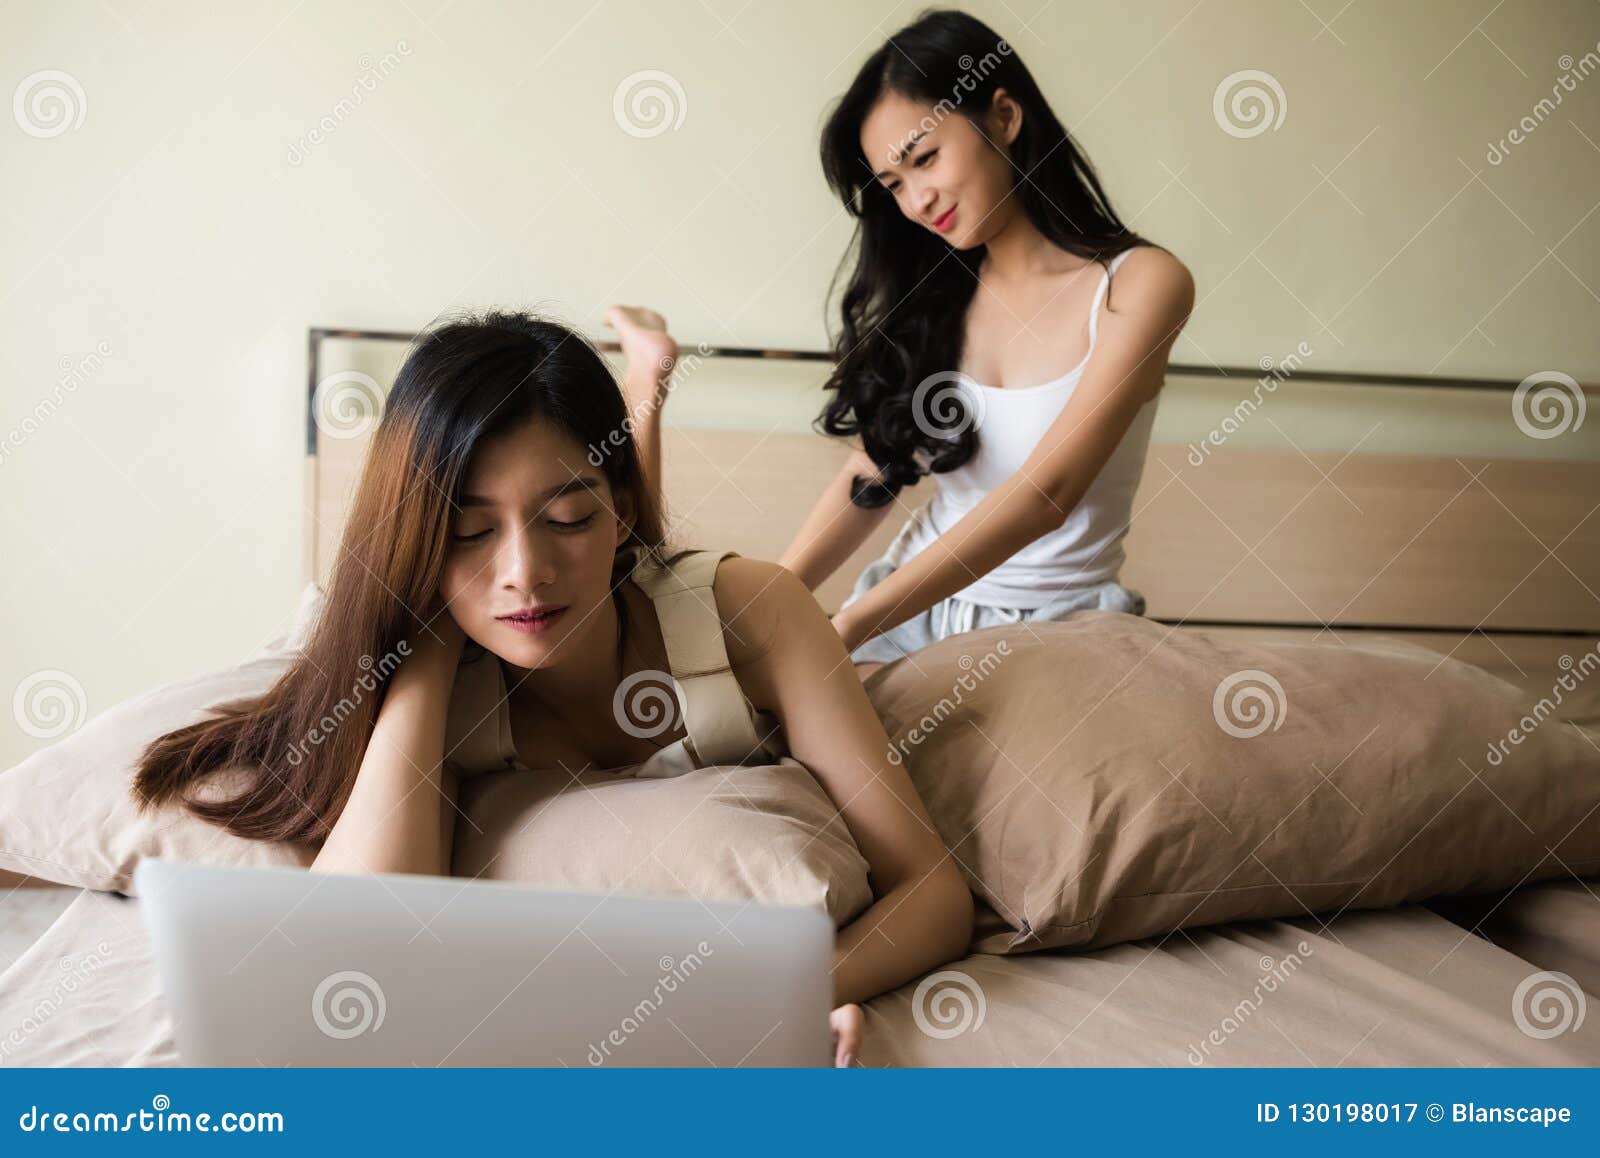 Japanese Lesbians Massage